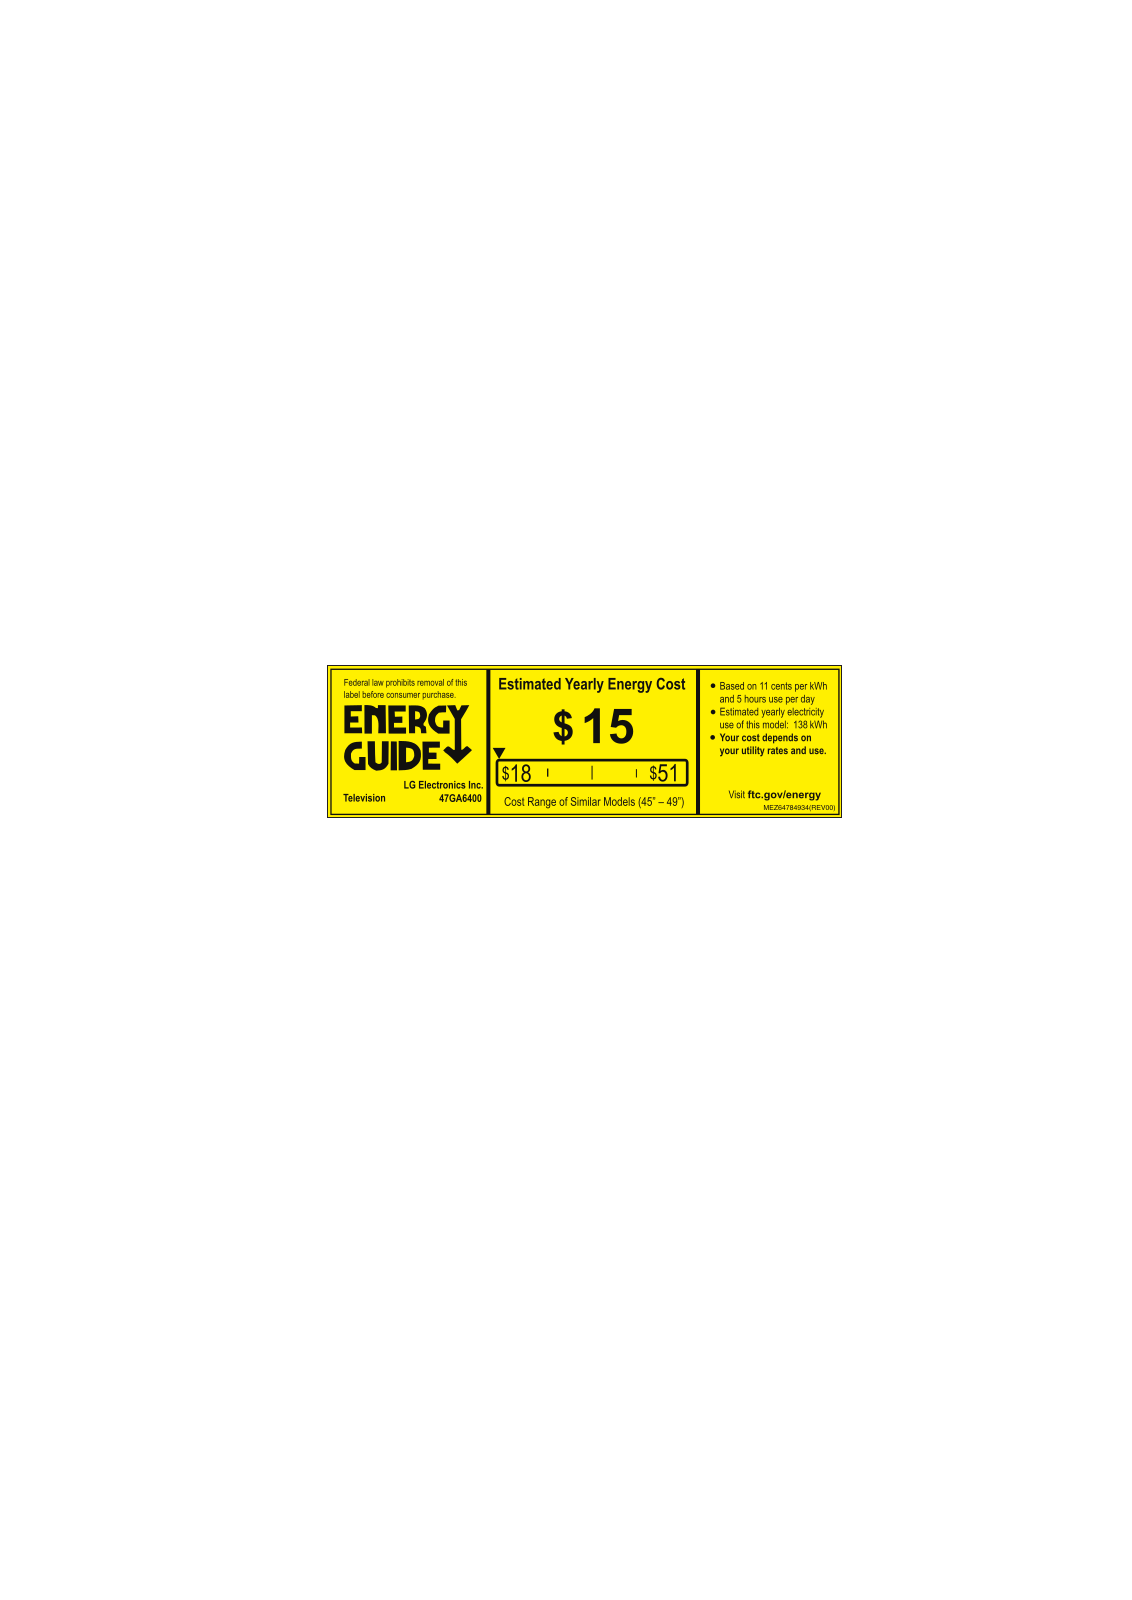 LG 47GA6400 Energy Guide